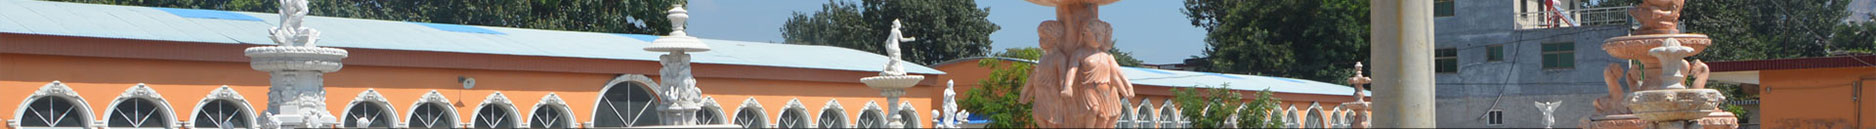 Outdoor Rome Small Marble Trevi Fountain Garden Decor for Sale MOKK-839